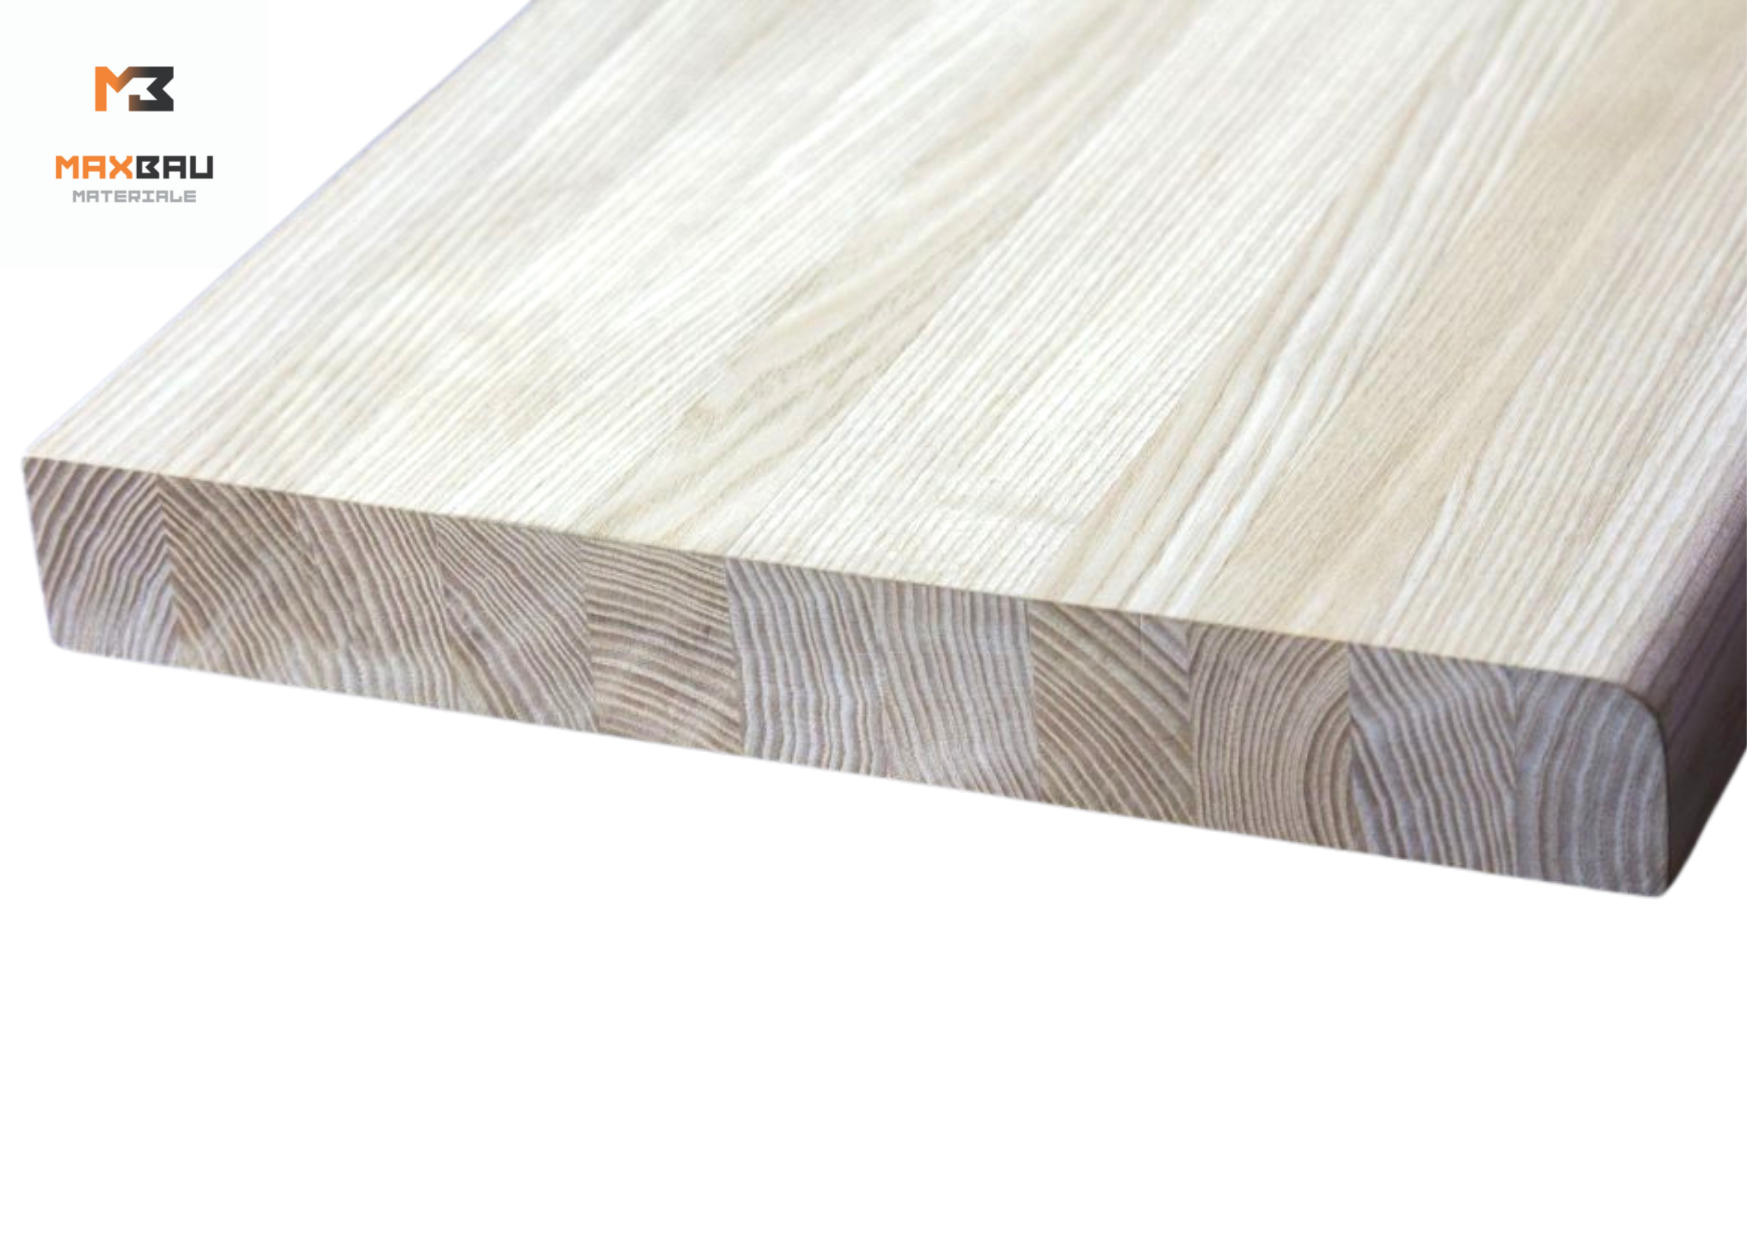 Placi din lemn incleiat - Placa de lemn incleiat MaxBau 2500 x 400 x 28 mm Clasa AB, maxbau.ro